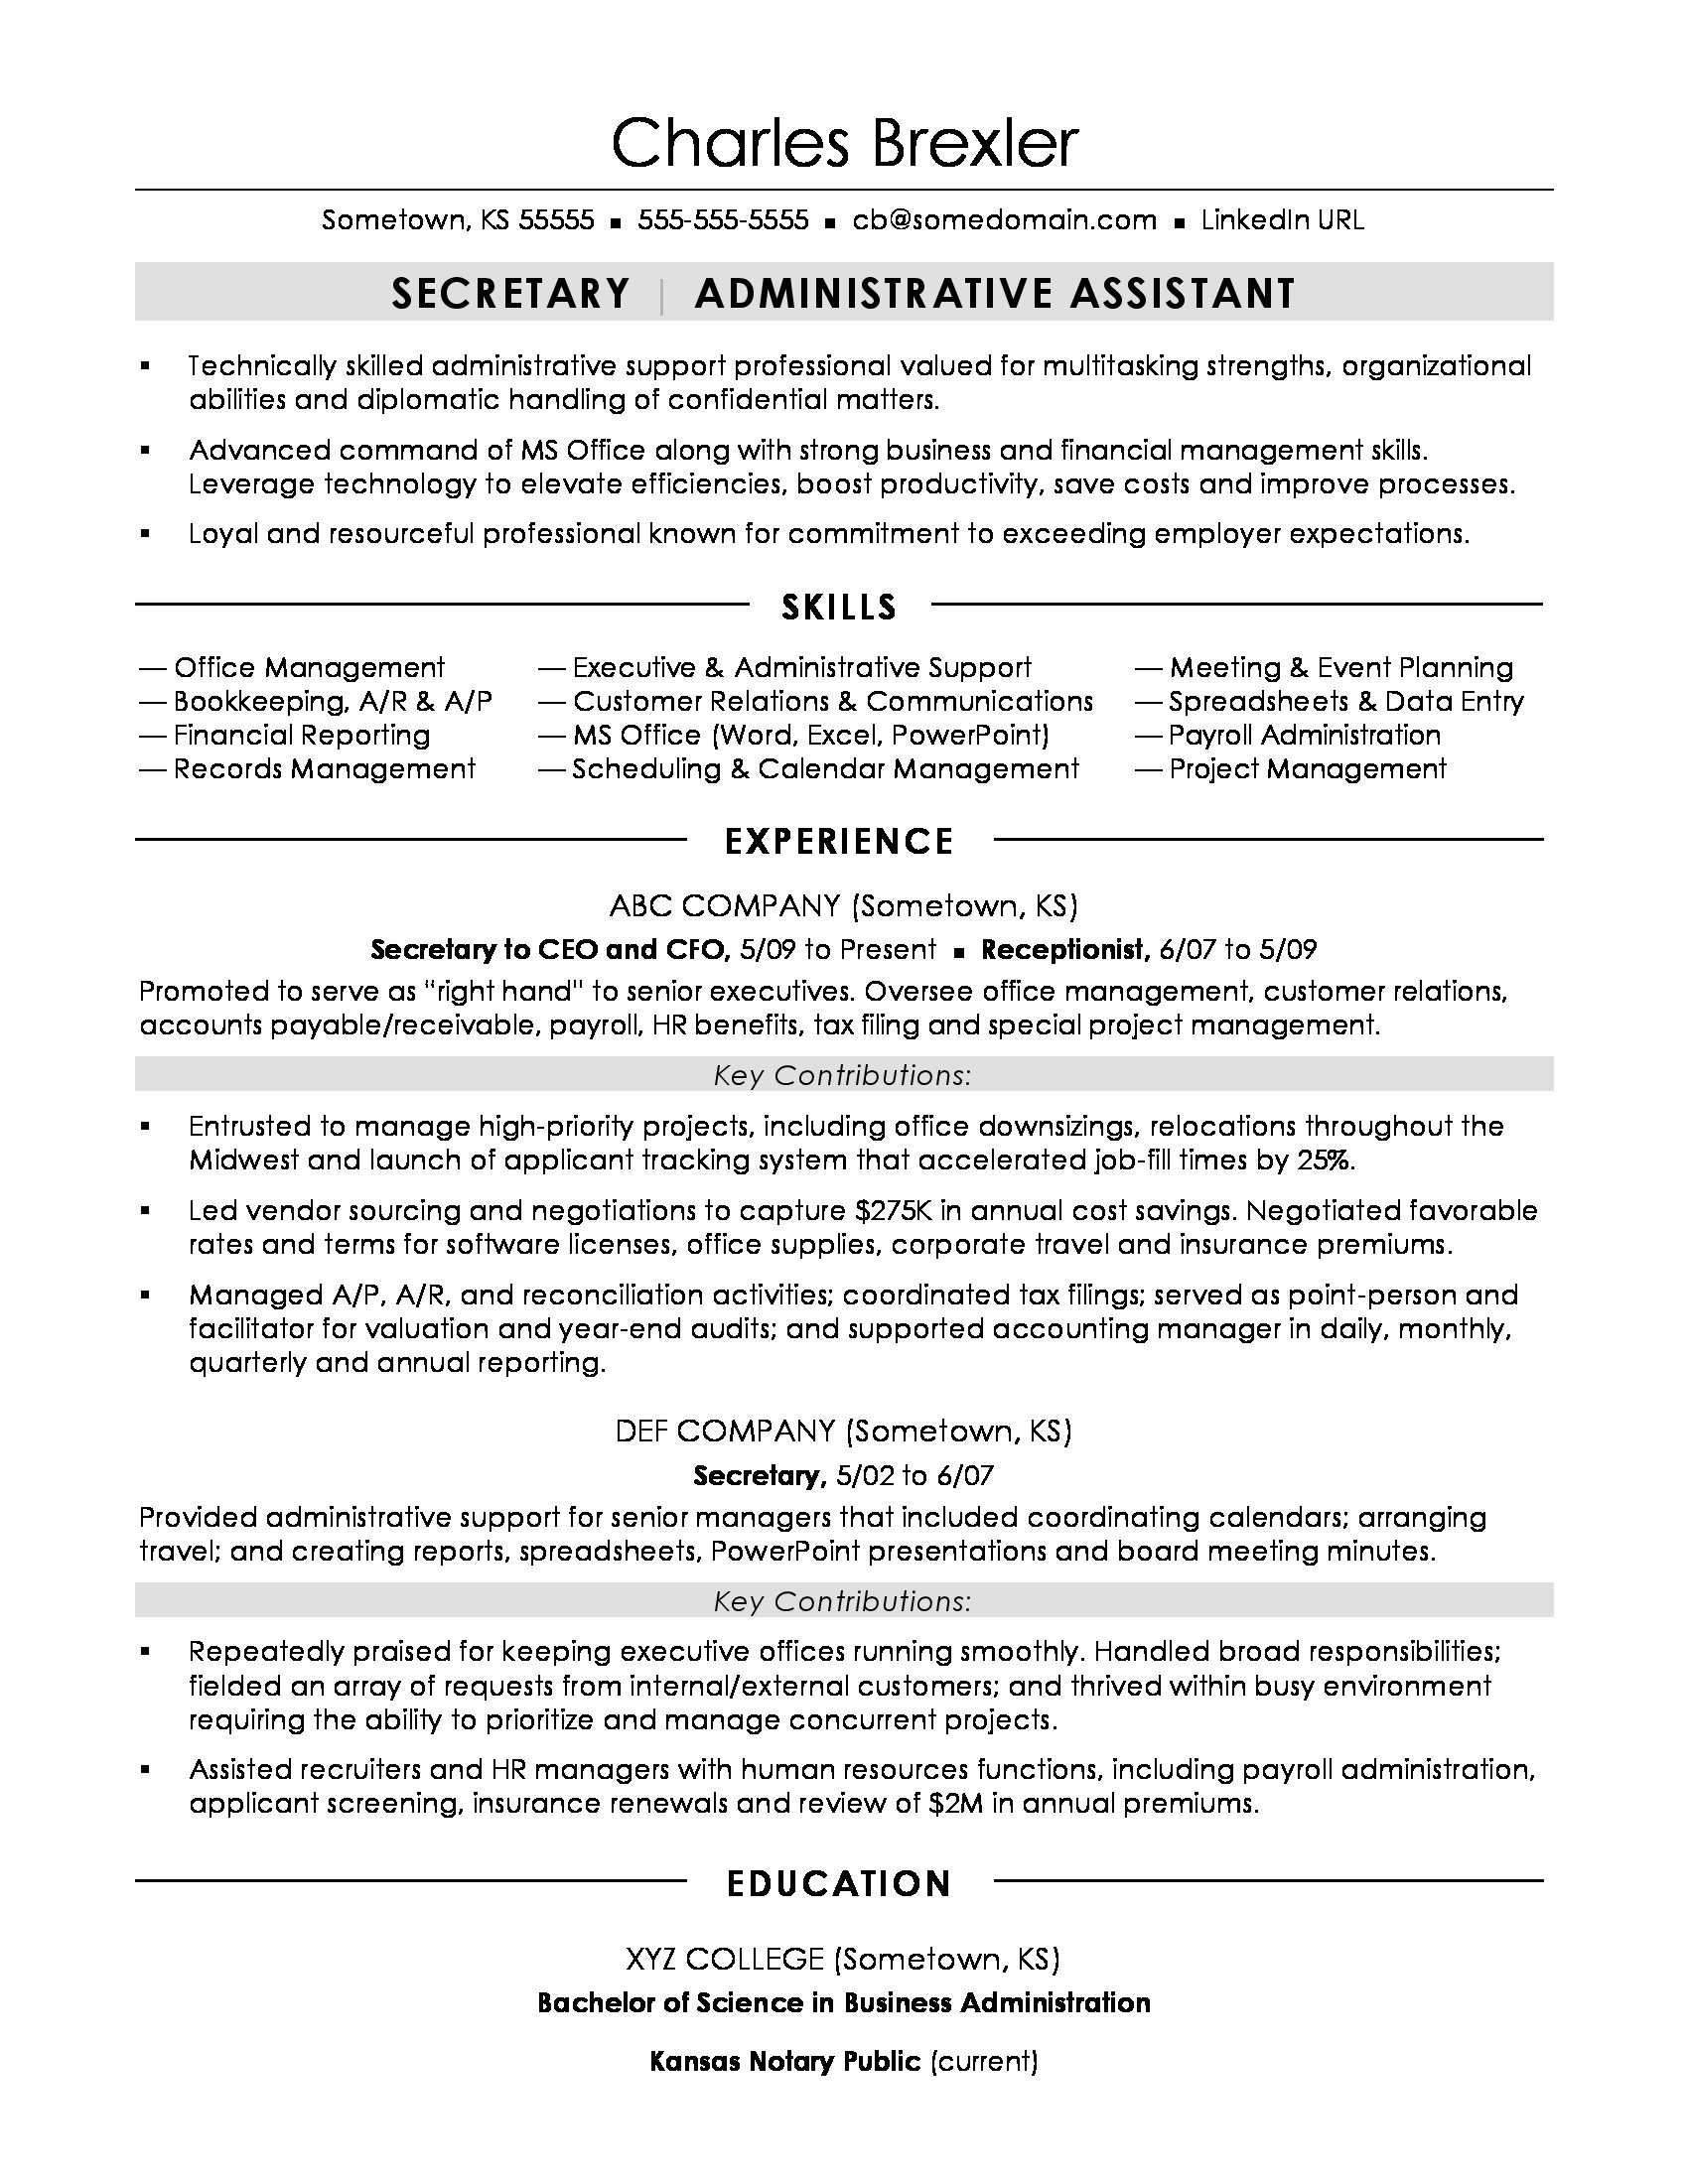 Sample Resume for Secretary without Experience Secretary Resume Sample Monster.com